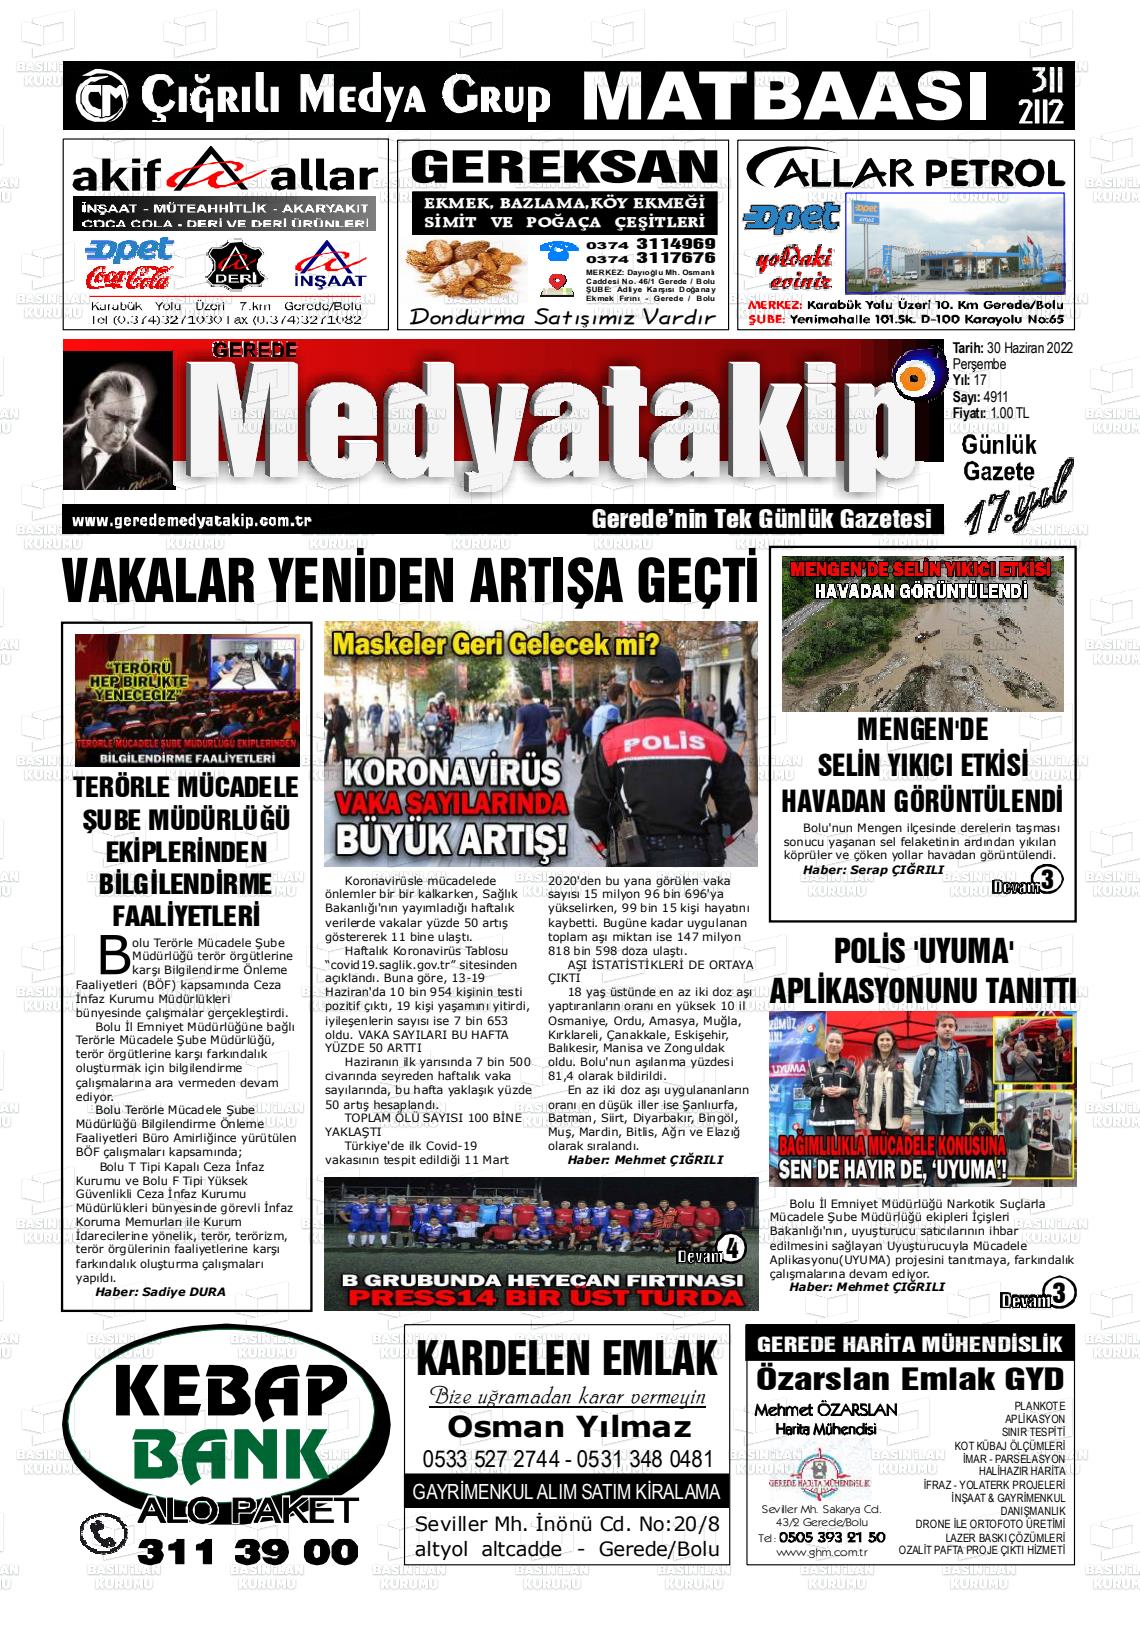 02 Temmuz 2022 Gerede Medya Takip Gazete Manşeti